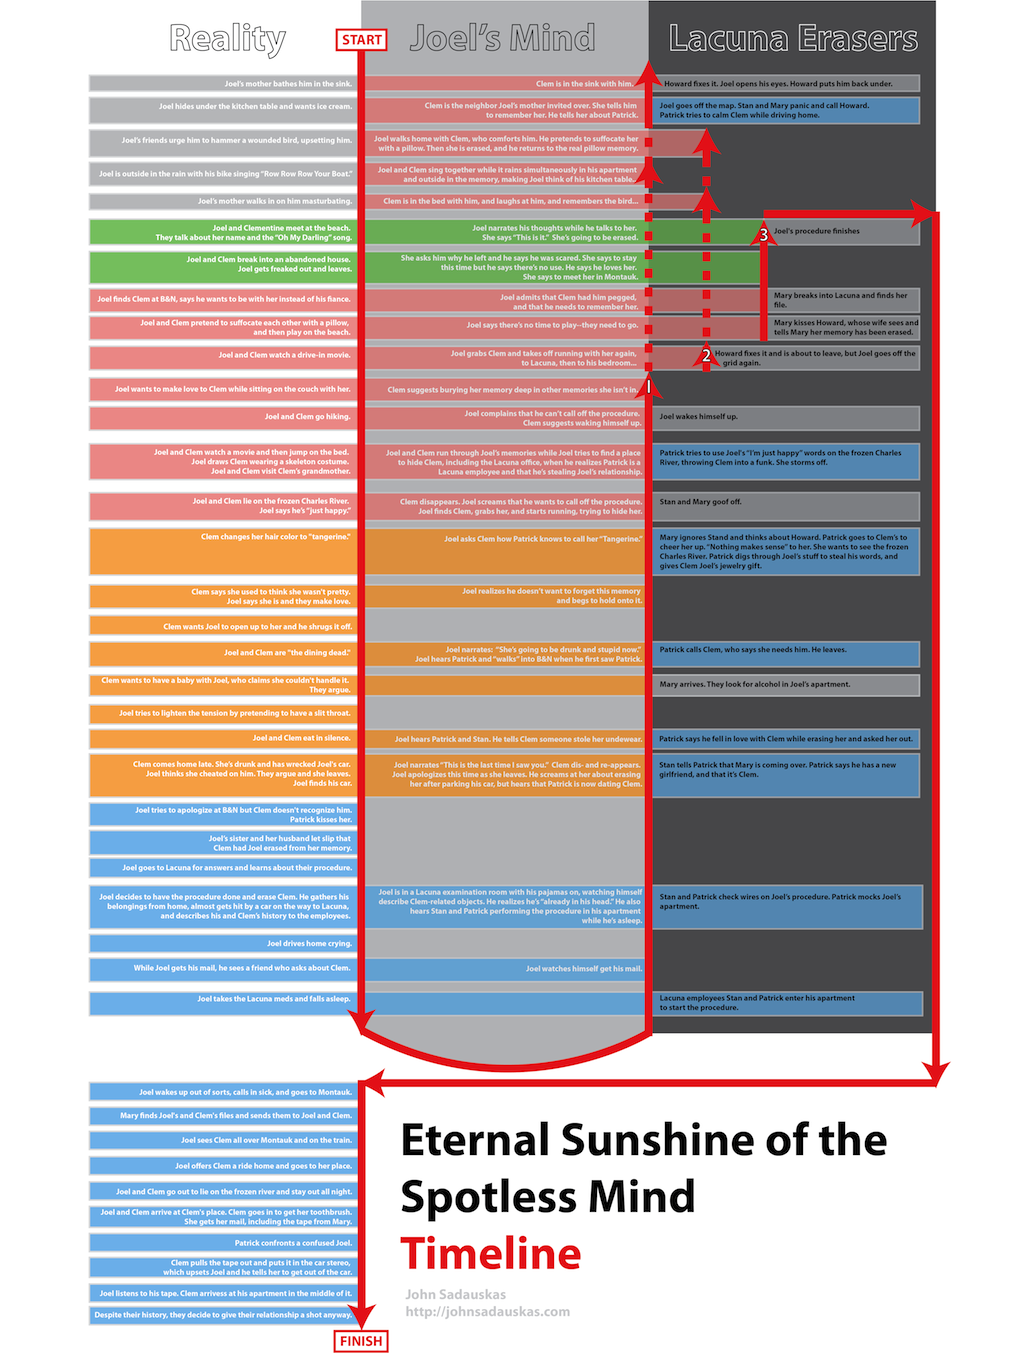 Eternal Sunshine of the Spotless Mind Timeline